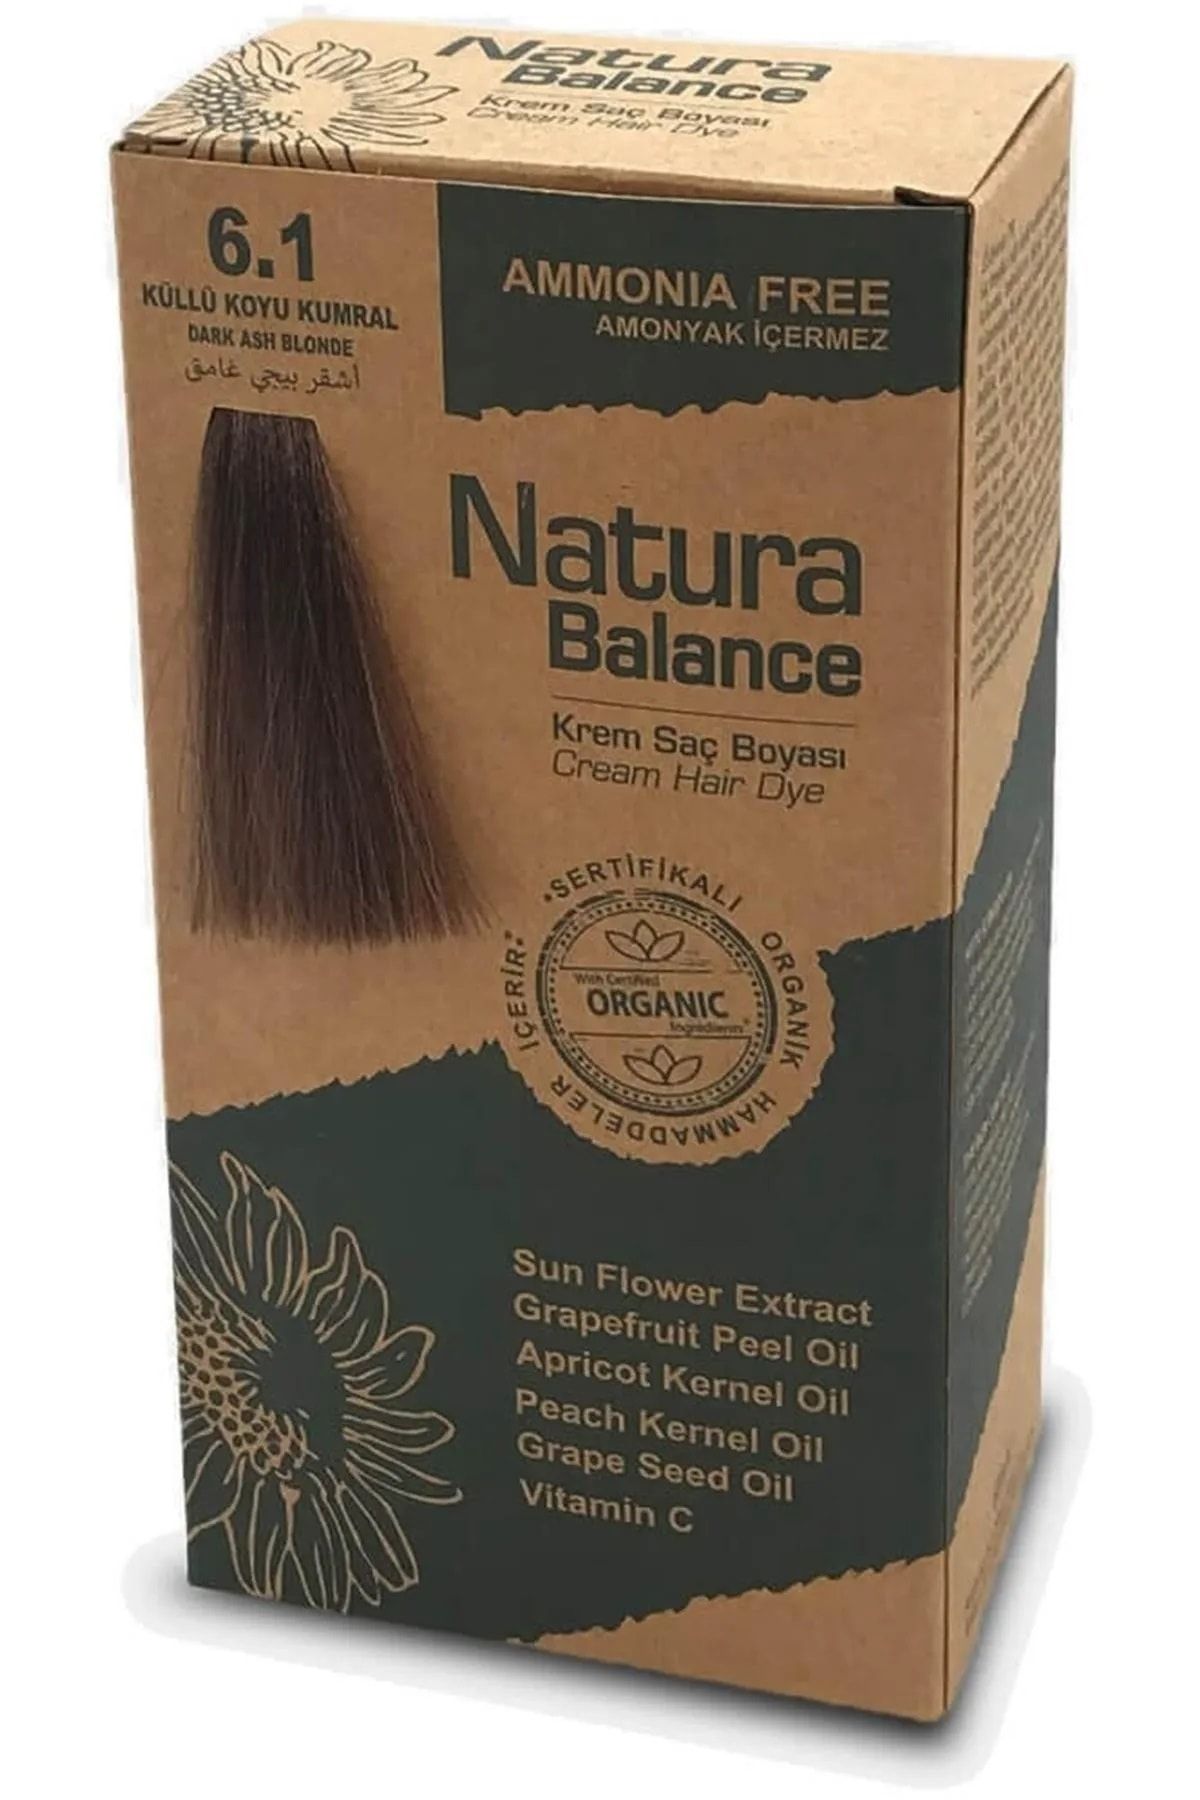 NATURABALANCE Natura Balance 6.1 Küllü Koyu Kumral Organik Krem Saç Boyası